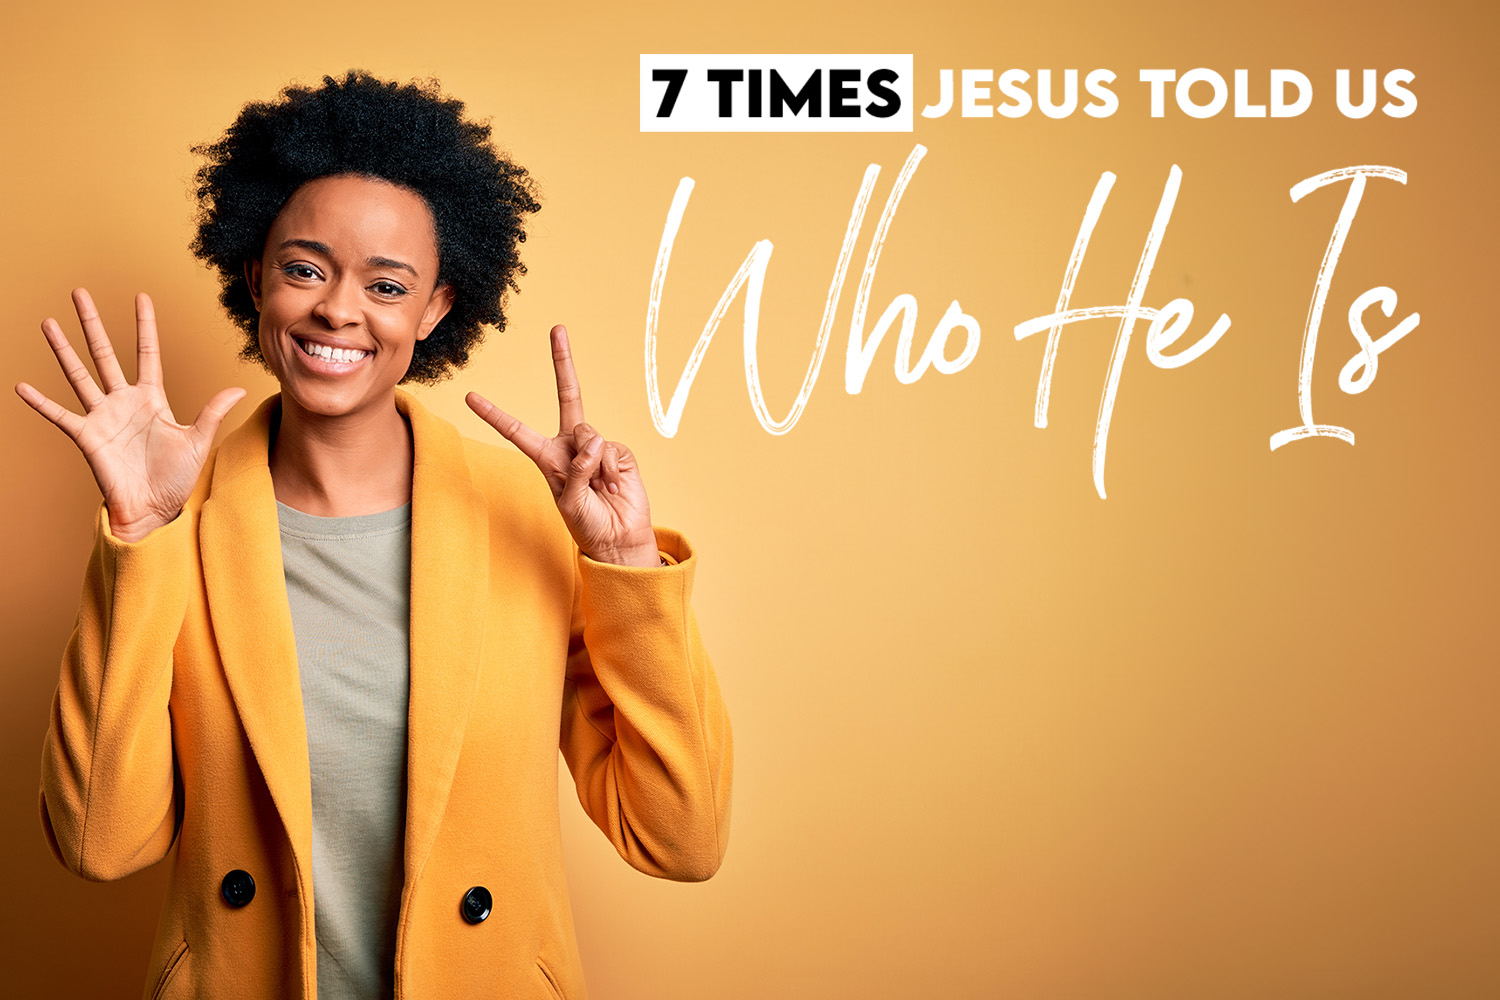 7 Times Jesus Told Us